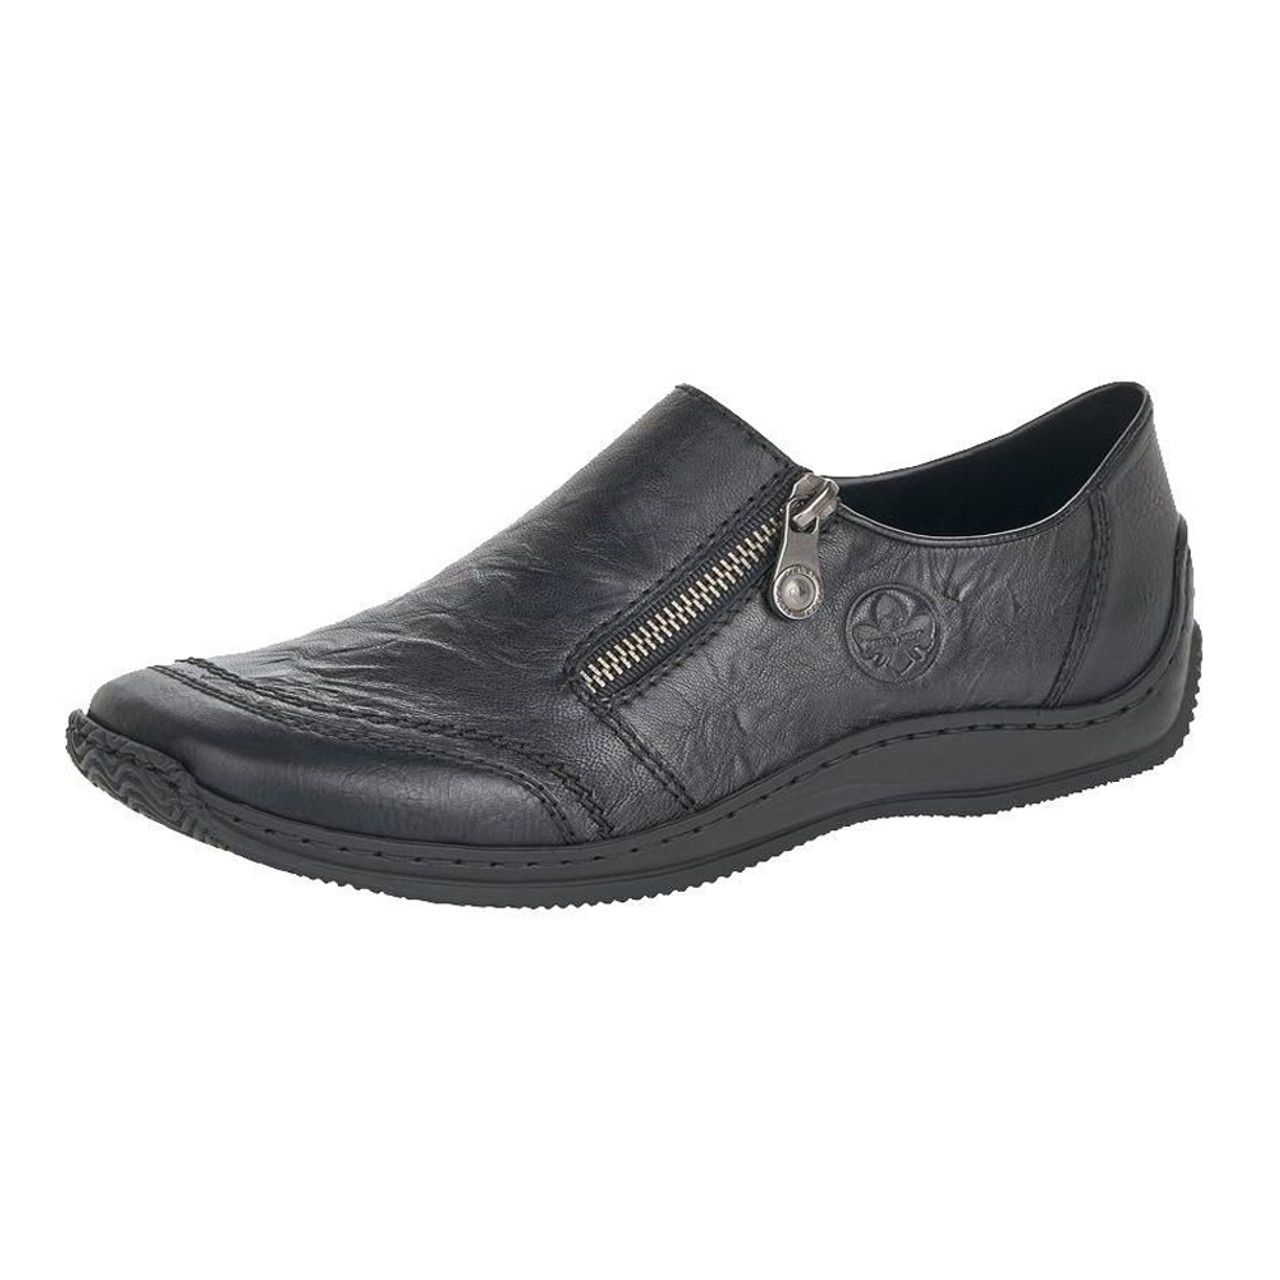 Rieker Women's Pattern Loafer - Black Discount Rieker Ladies Shoes & More - Shoolu.com | Shoolu.com